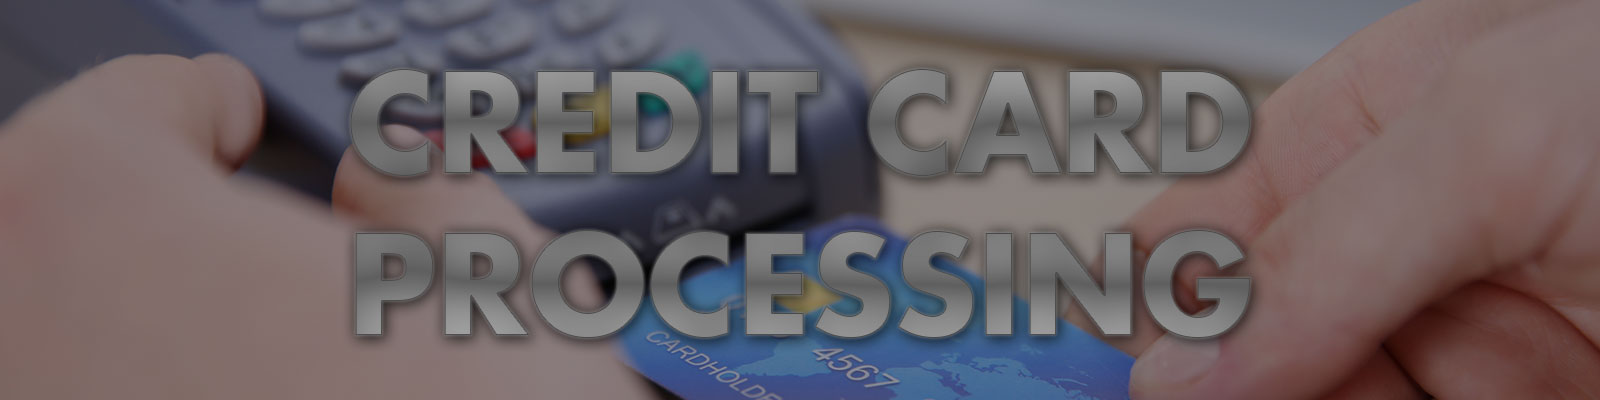 credit-card-processing-brandsource